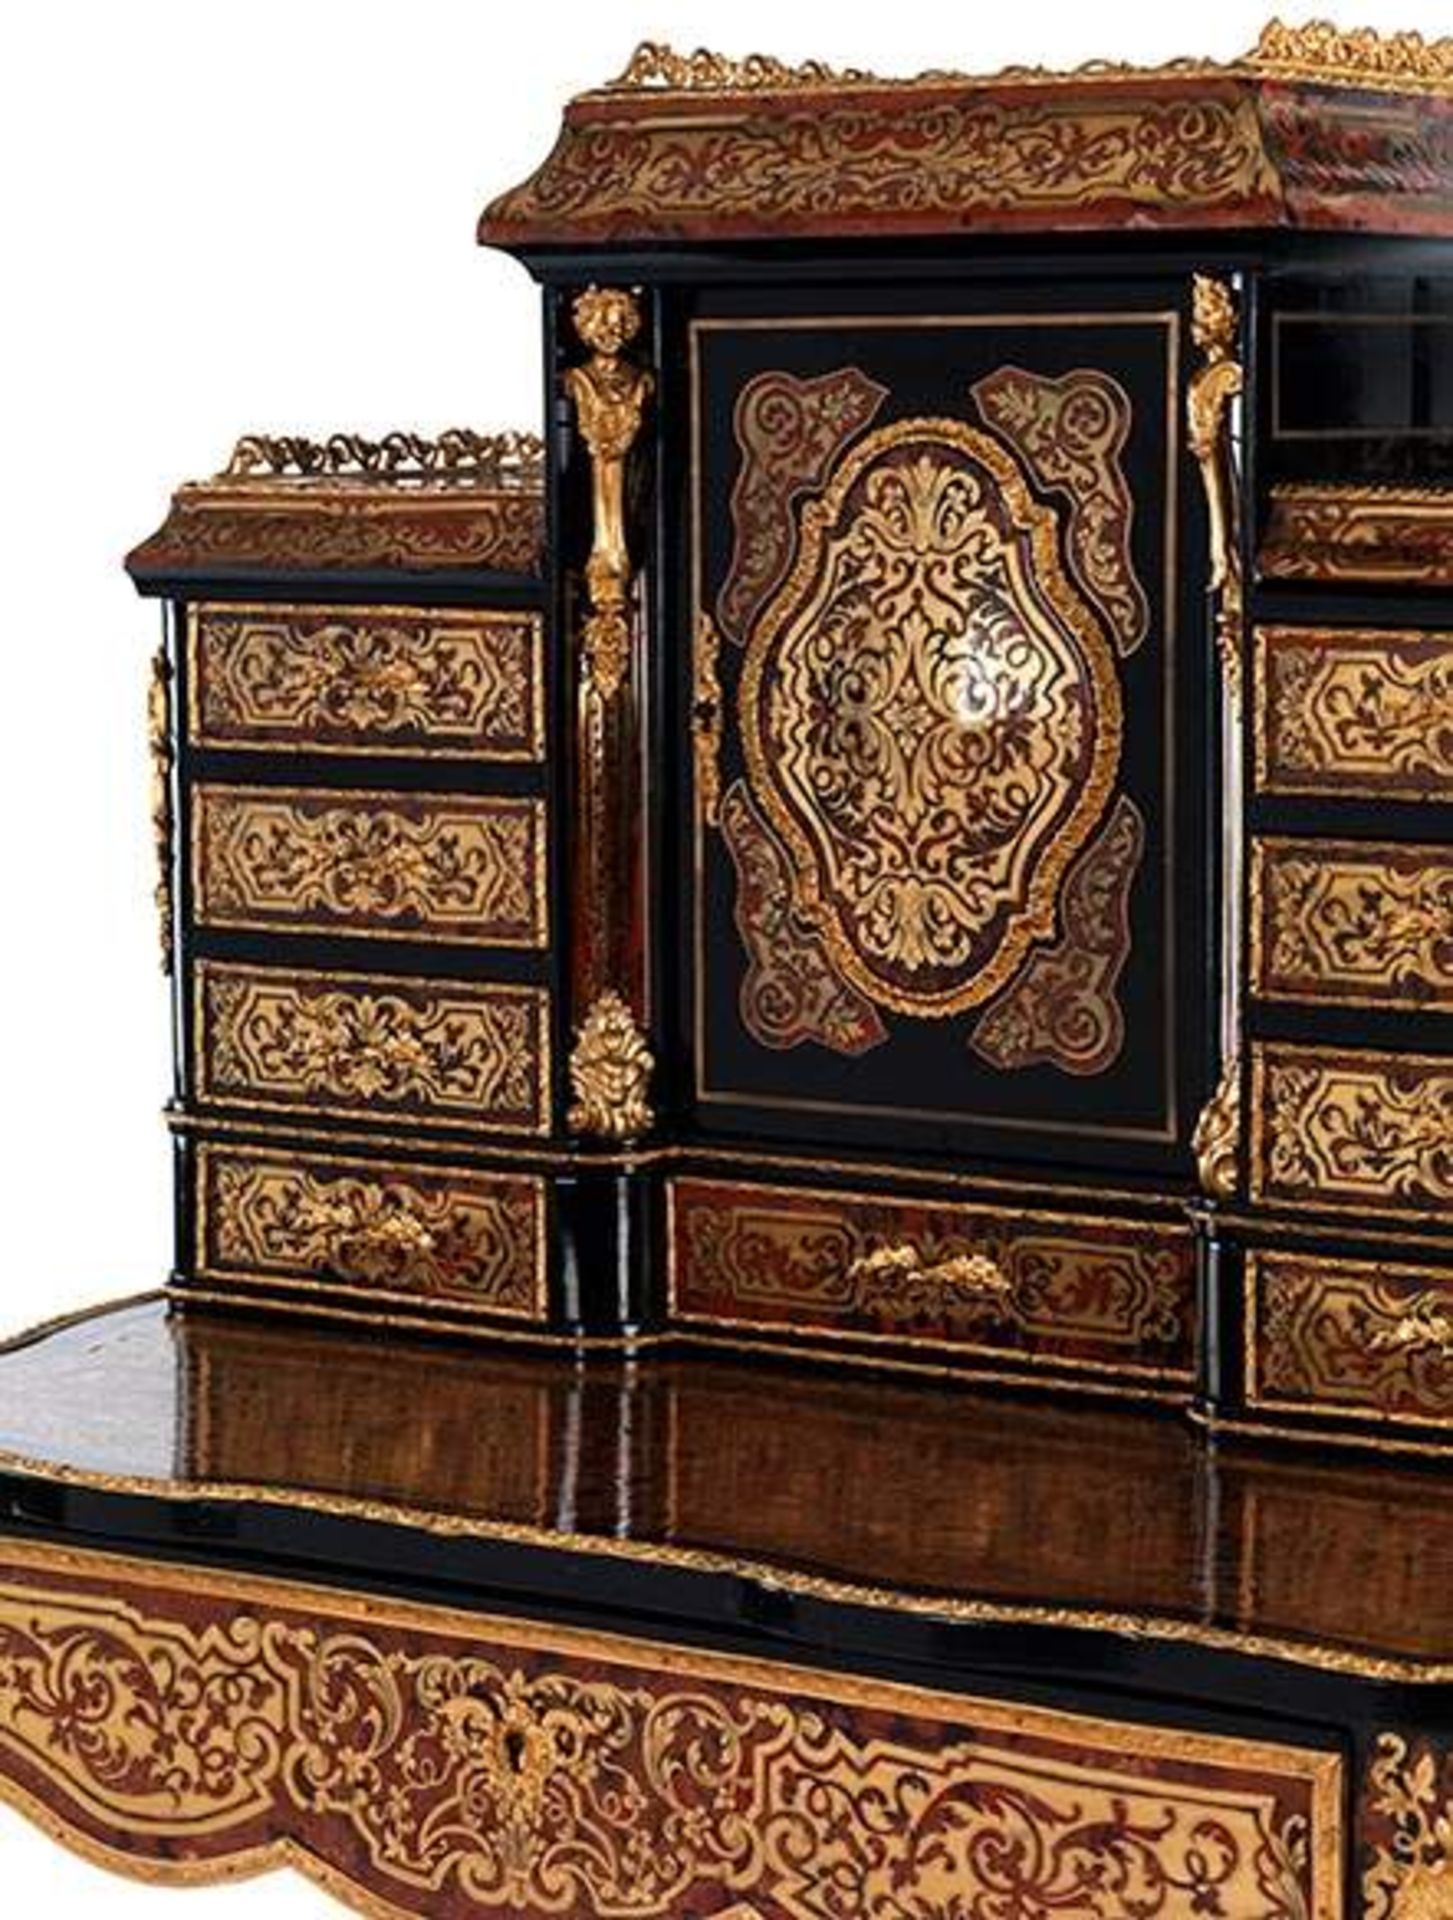 Magnificent Napoleon III bureau cabinet with Boulle-style marquetryHeight: 132 cm. Width: ca. 89 cm. - Bild 3 aus 5